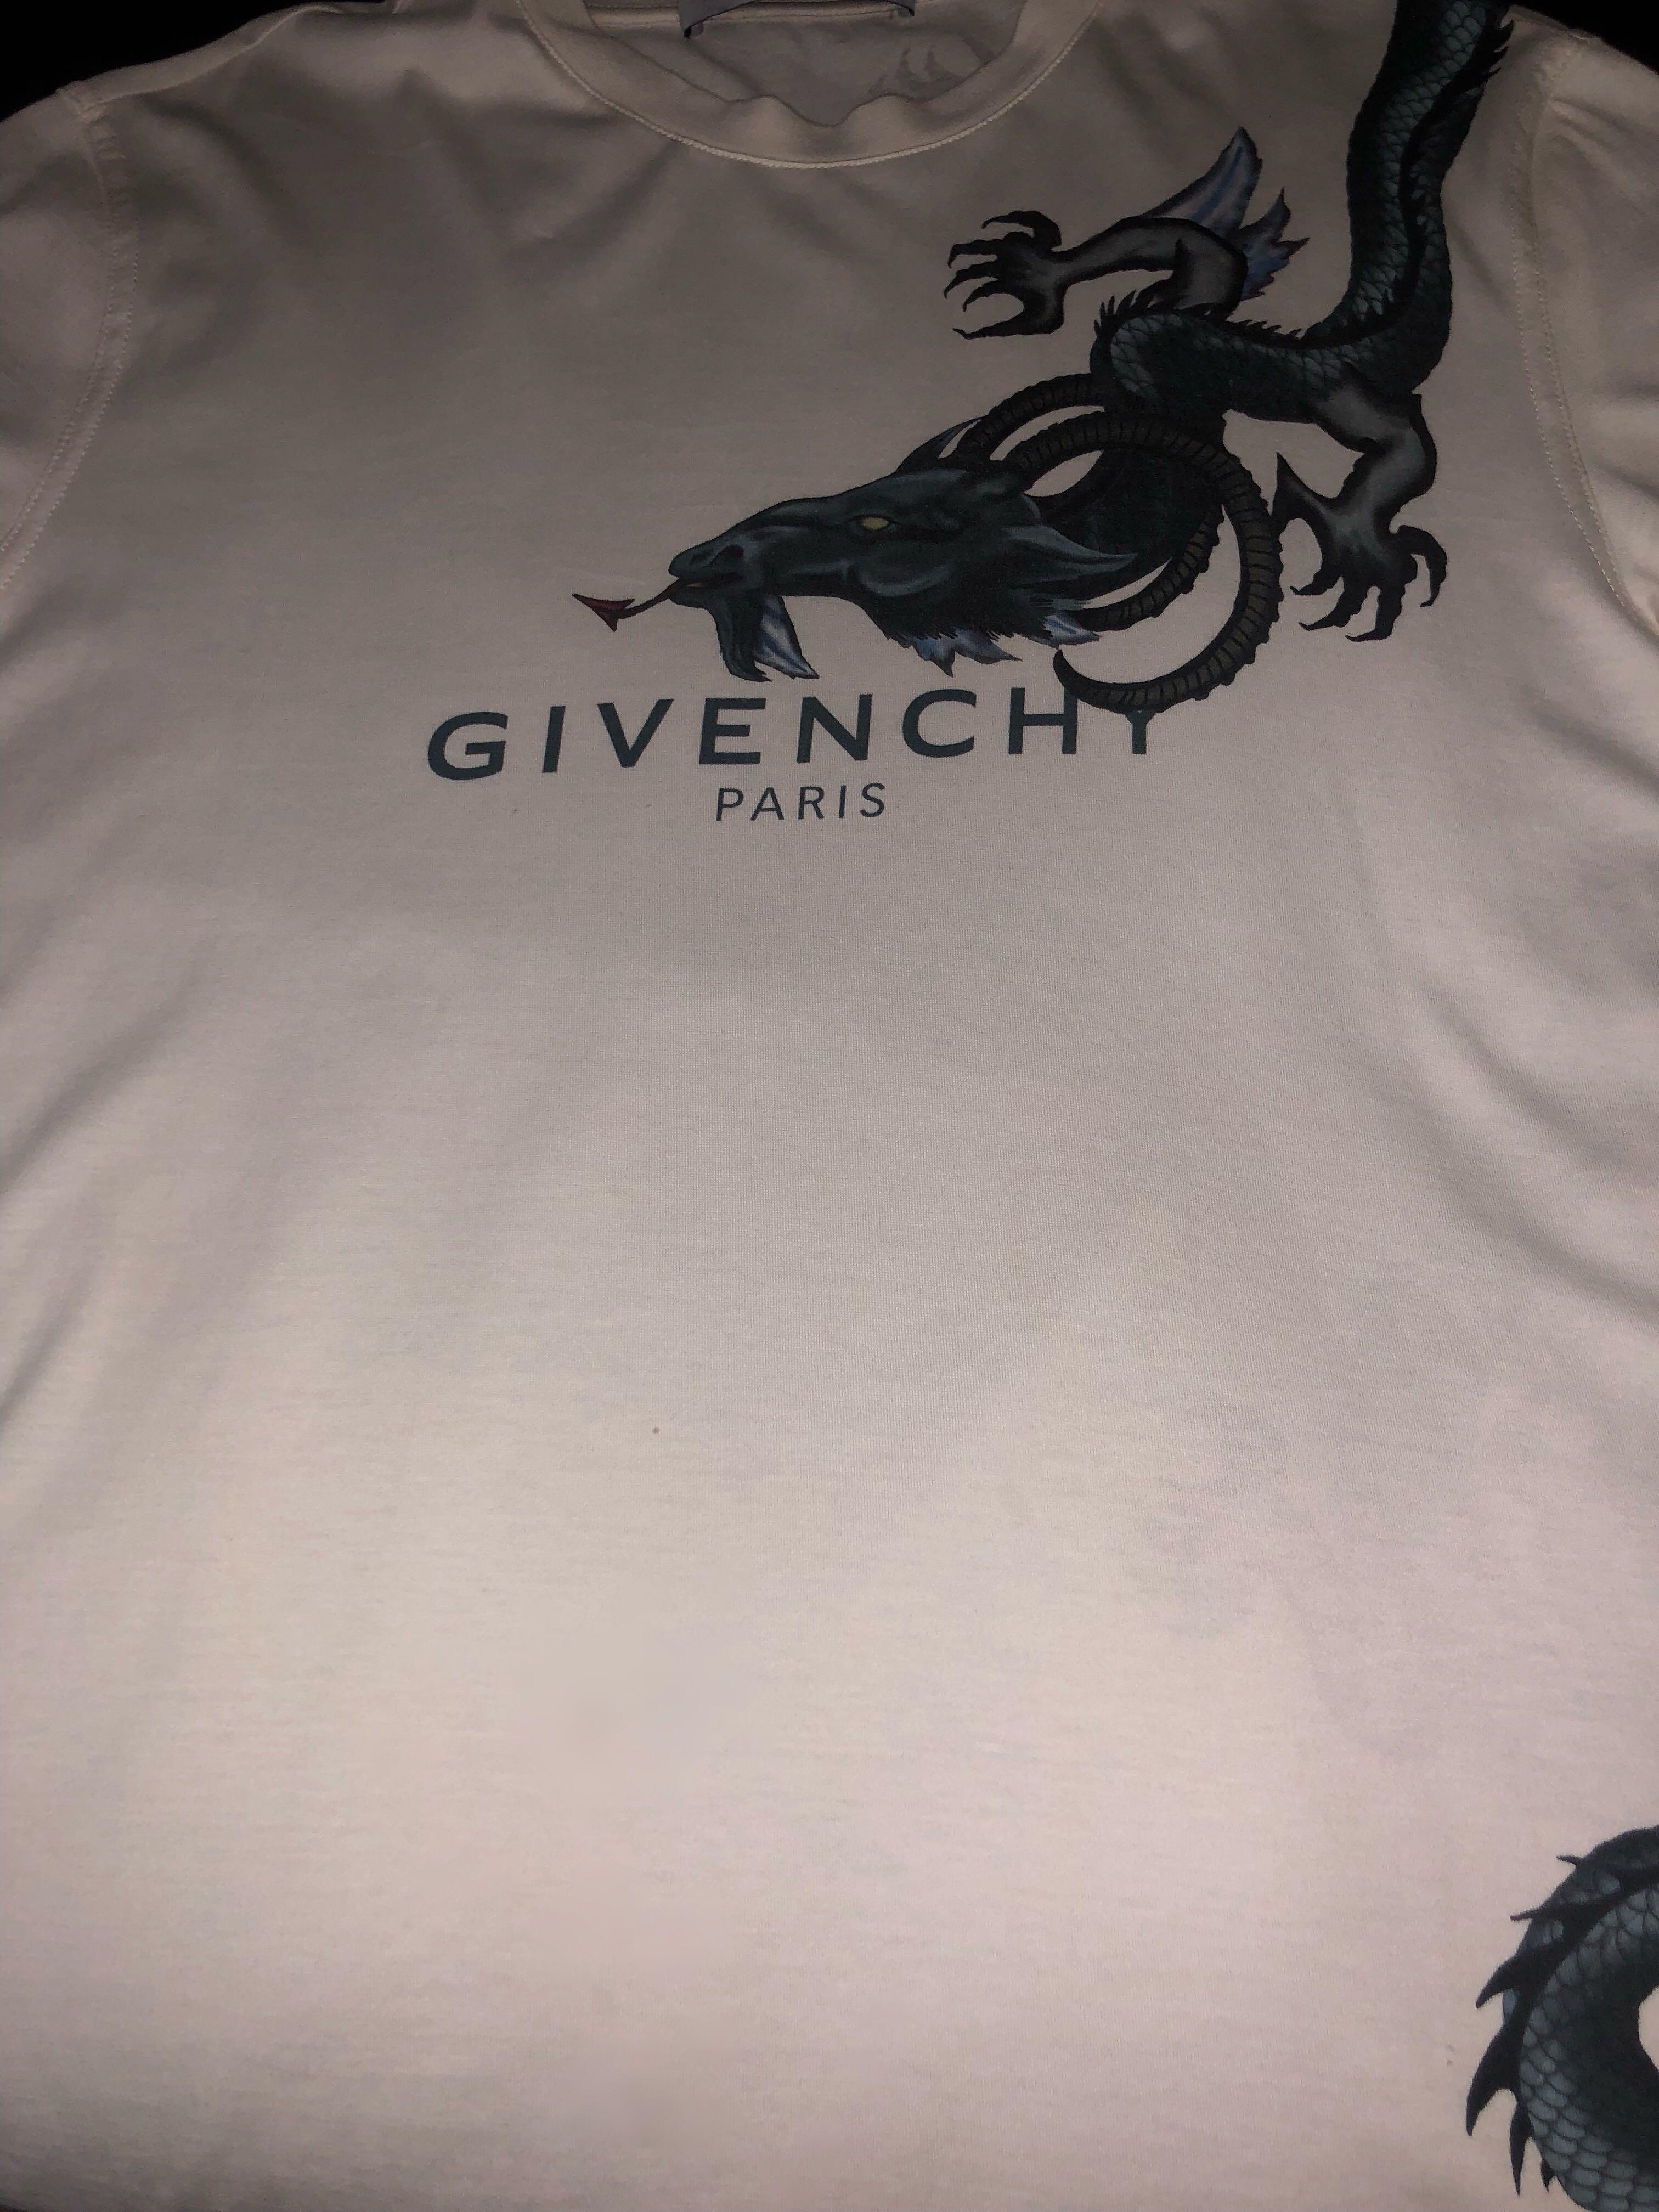 givenchy paris dragon t shirt